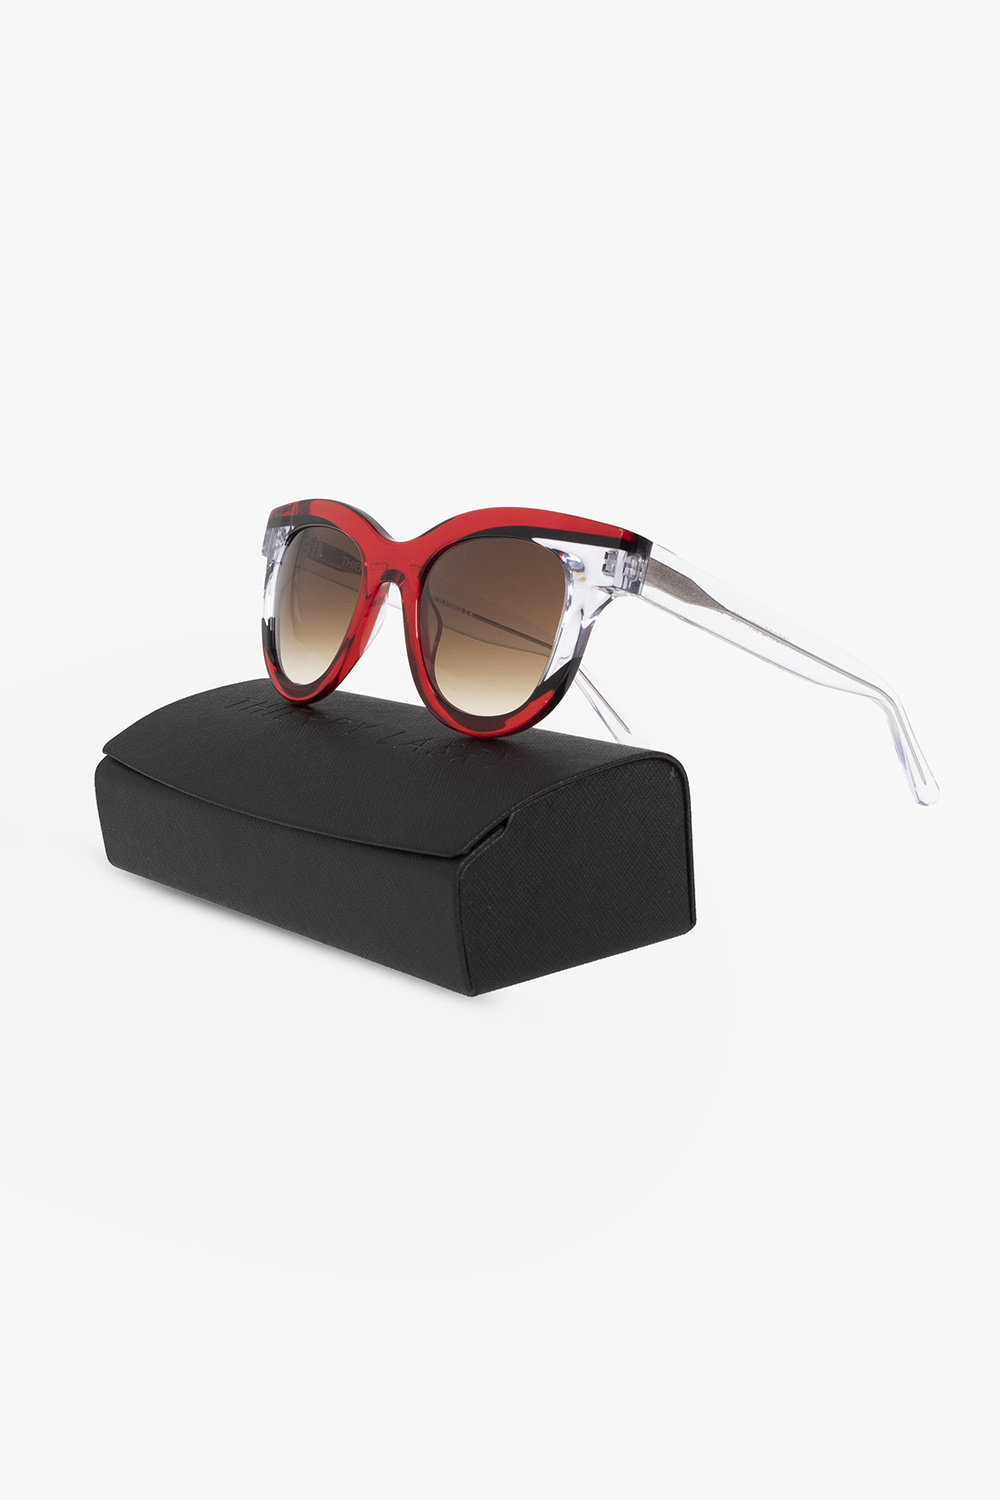 Thierry Lasry ‘Icecreamy’ Metal sunglasses